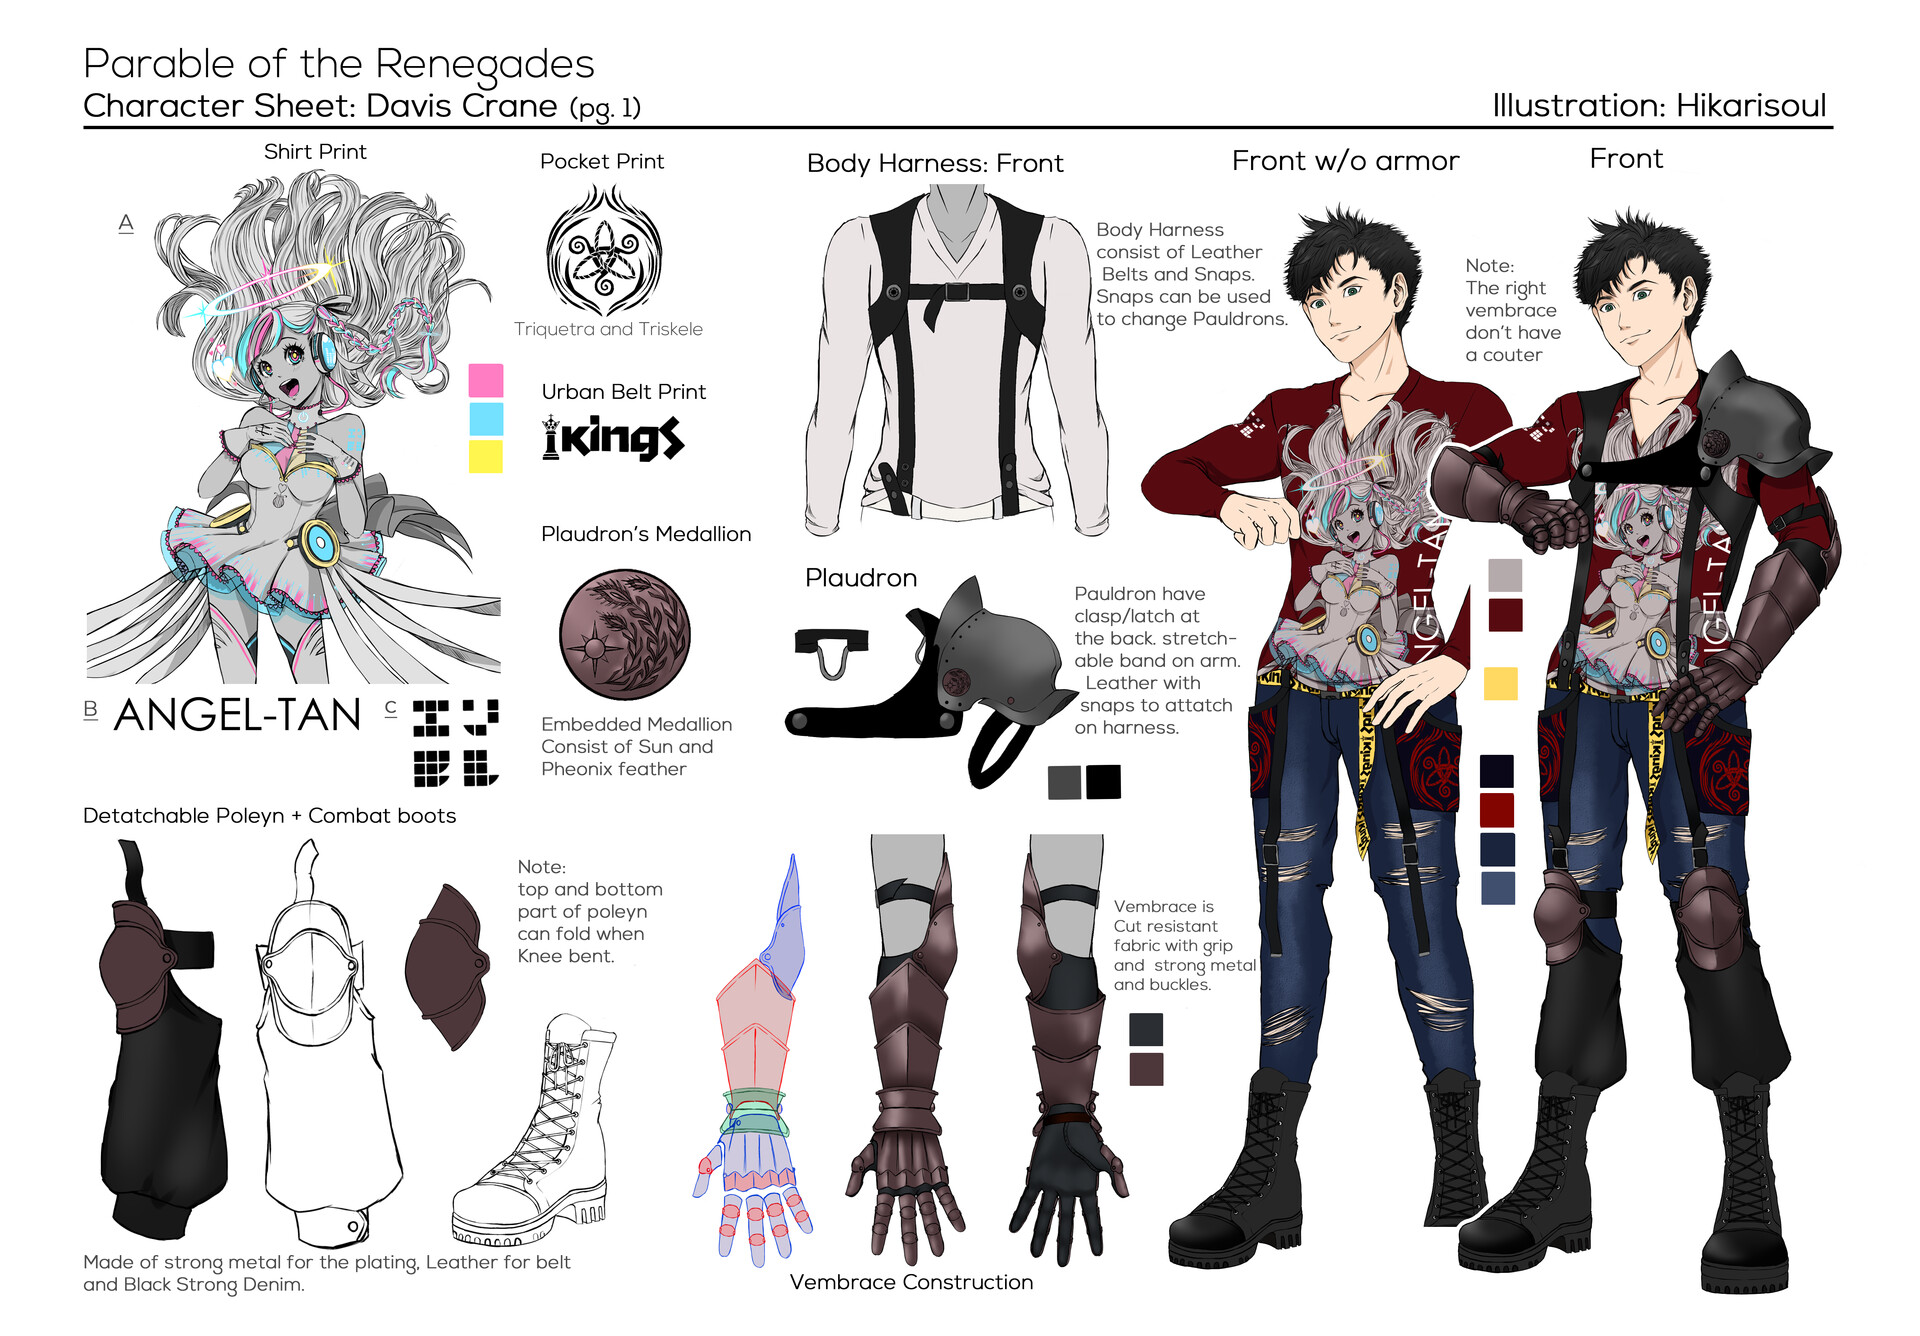 ArtStation - Parable of the Renegade Character Design : Davis Crane